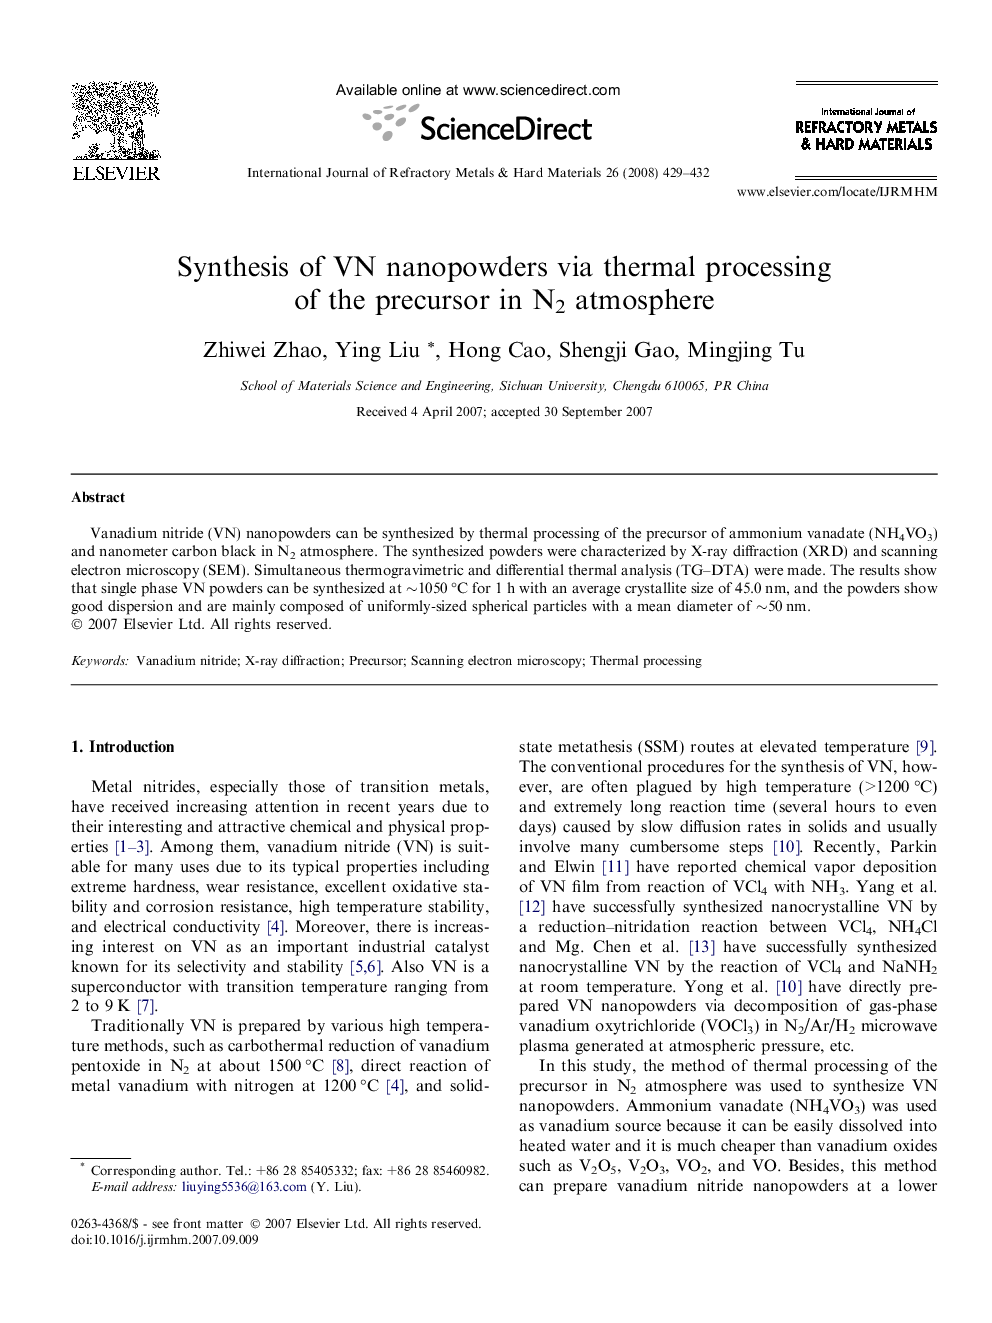 Synthesis of VN nanopowders via thermal processing of the precursor in N2 atmosphere